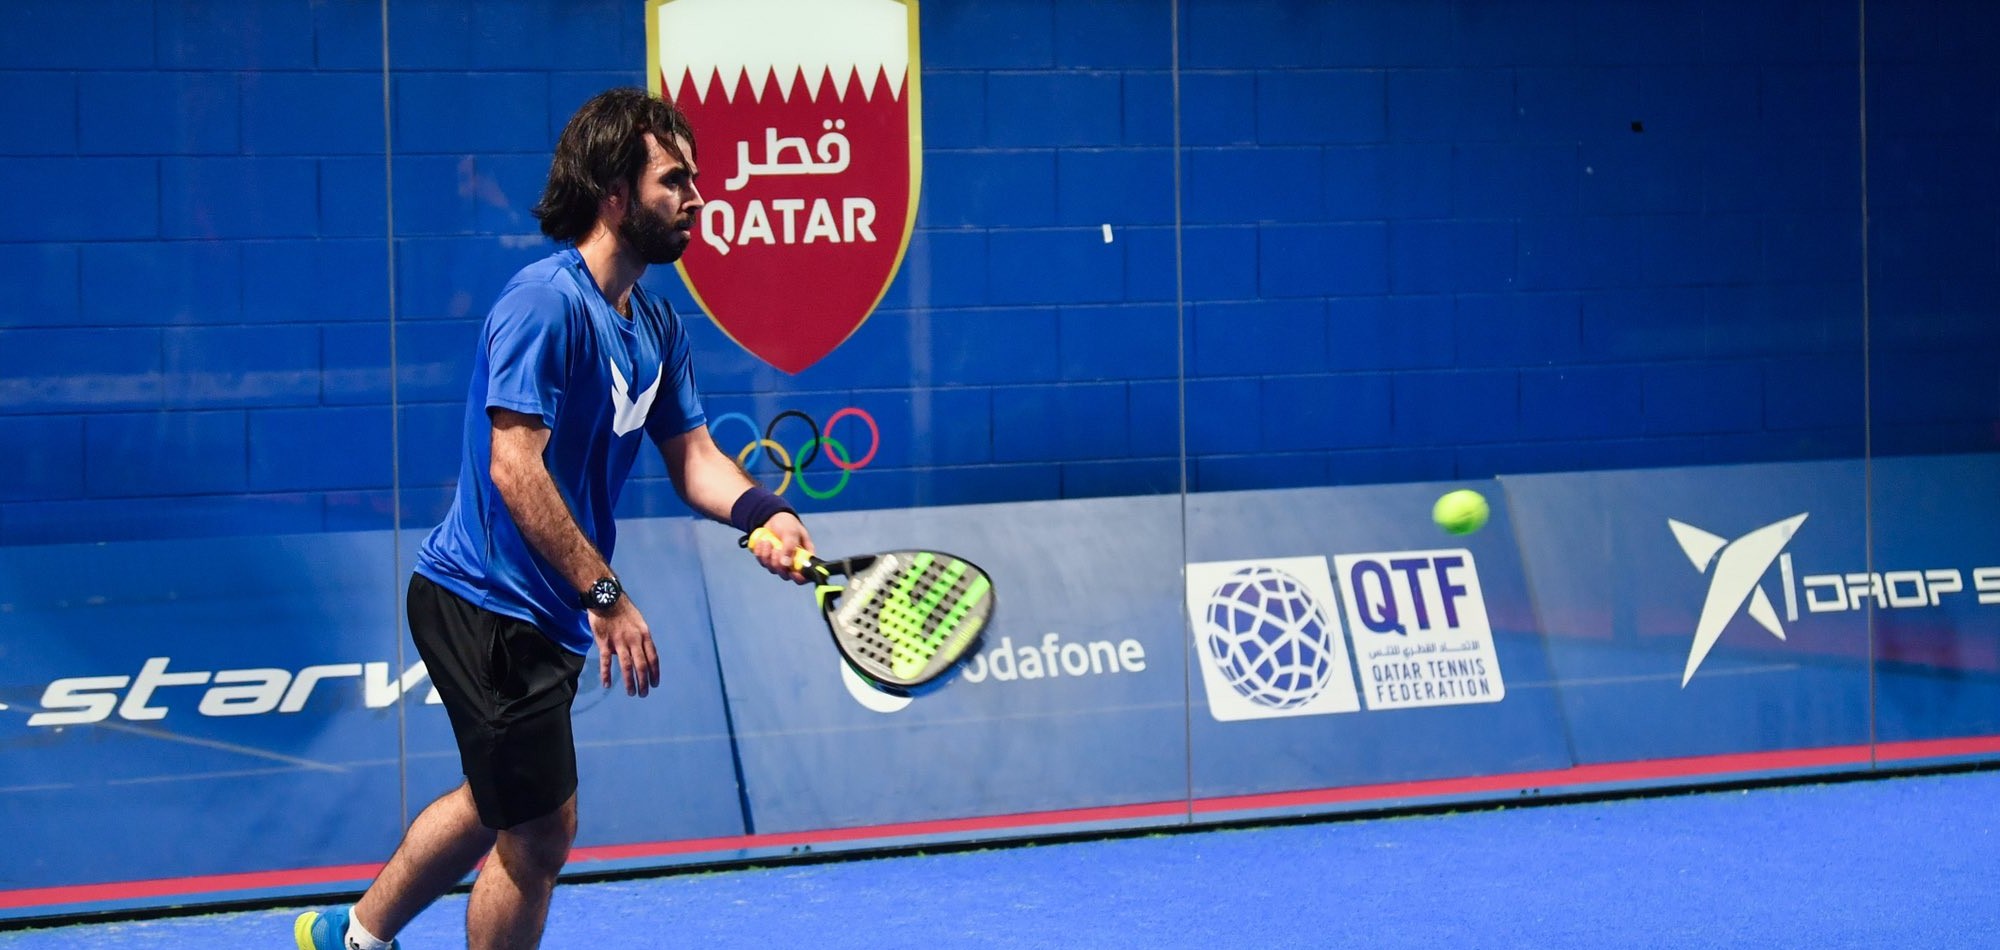 Proposed Doha 2030 venue hosts QOC Padel Tournament as gateway to community sport